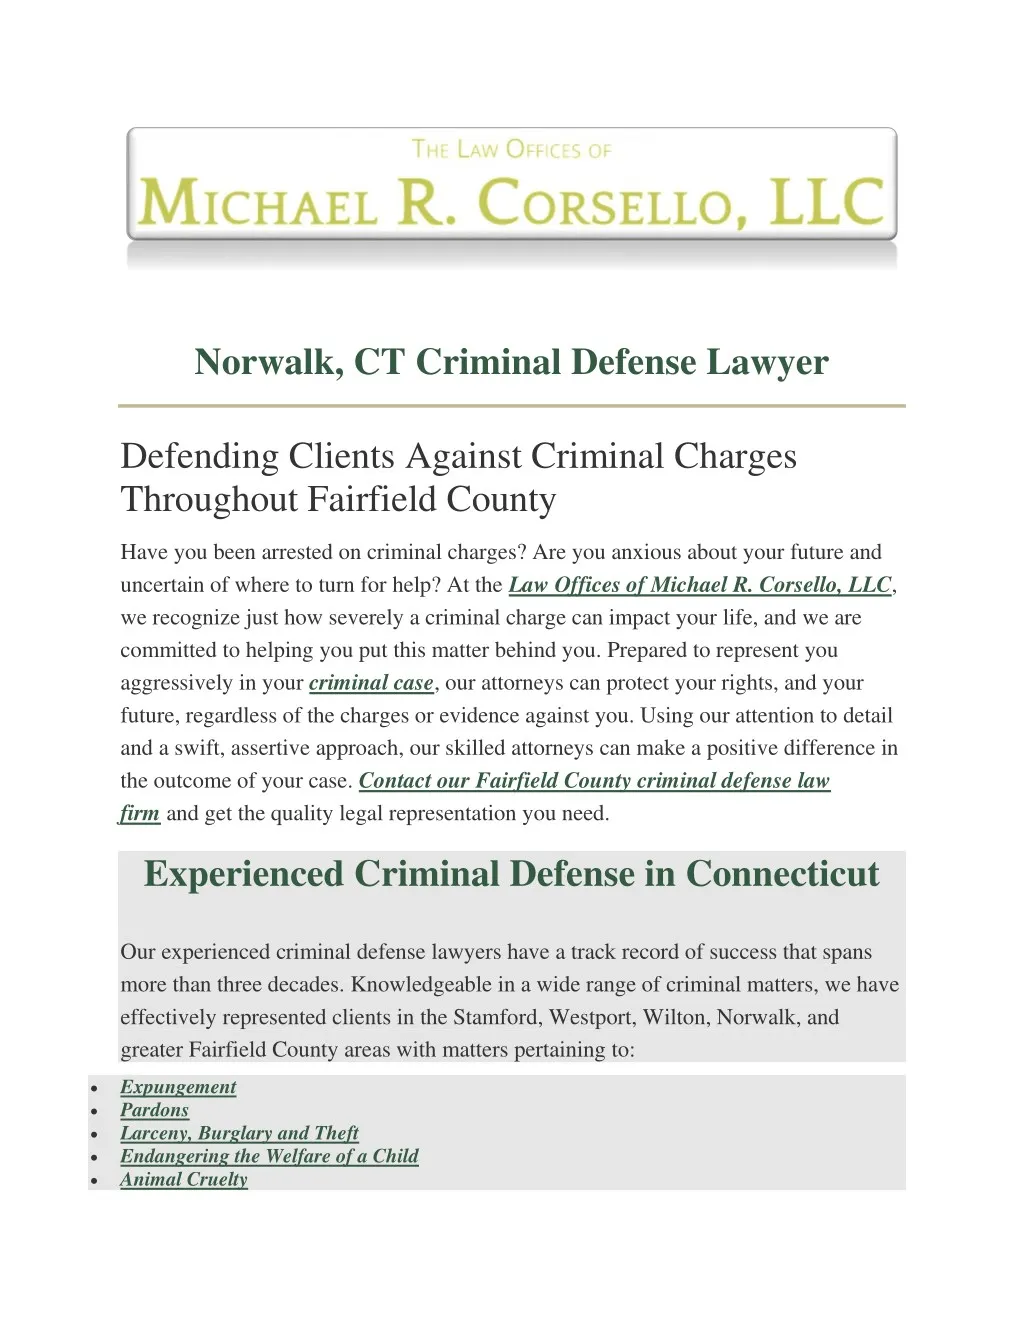 norwalk ct criminal defense lawyer n.